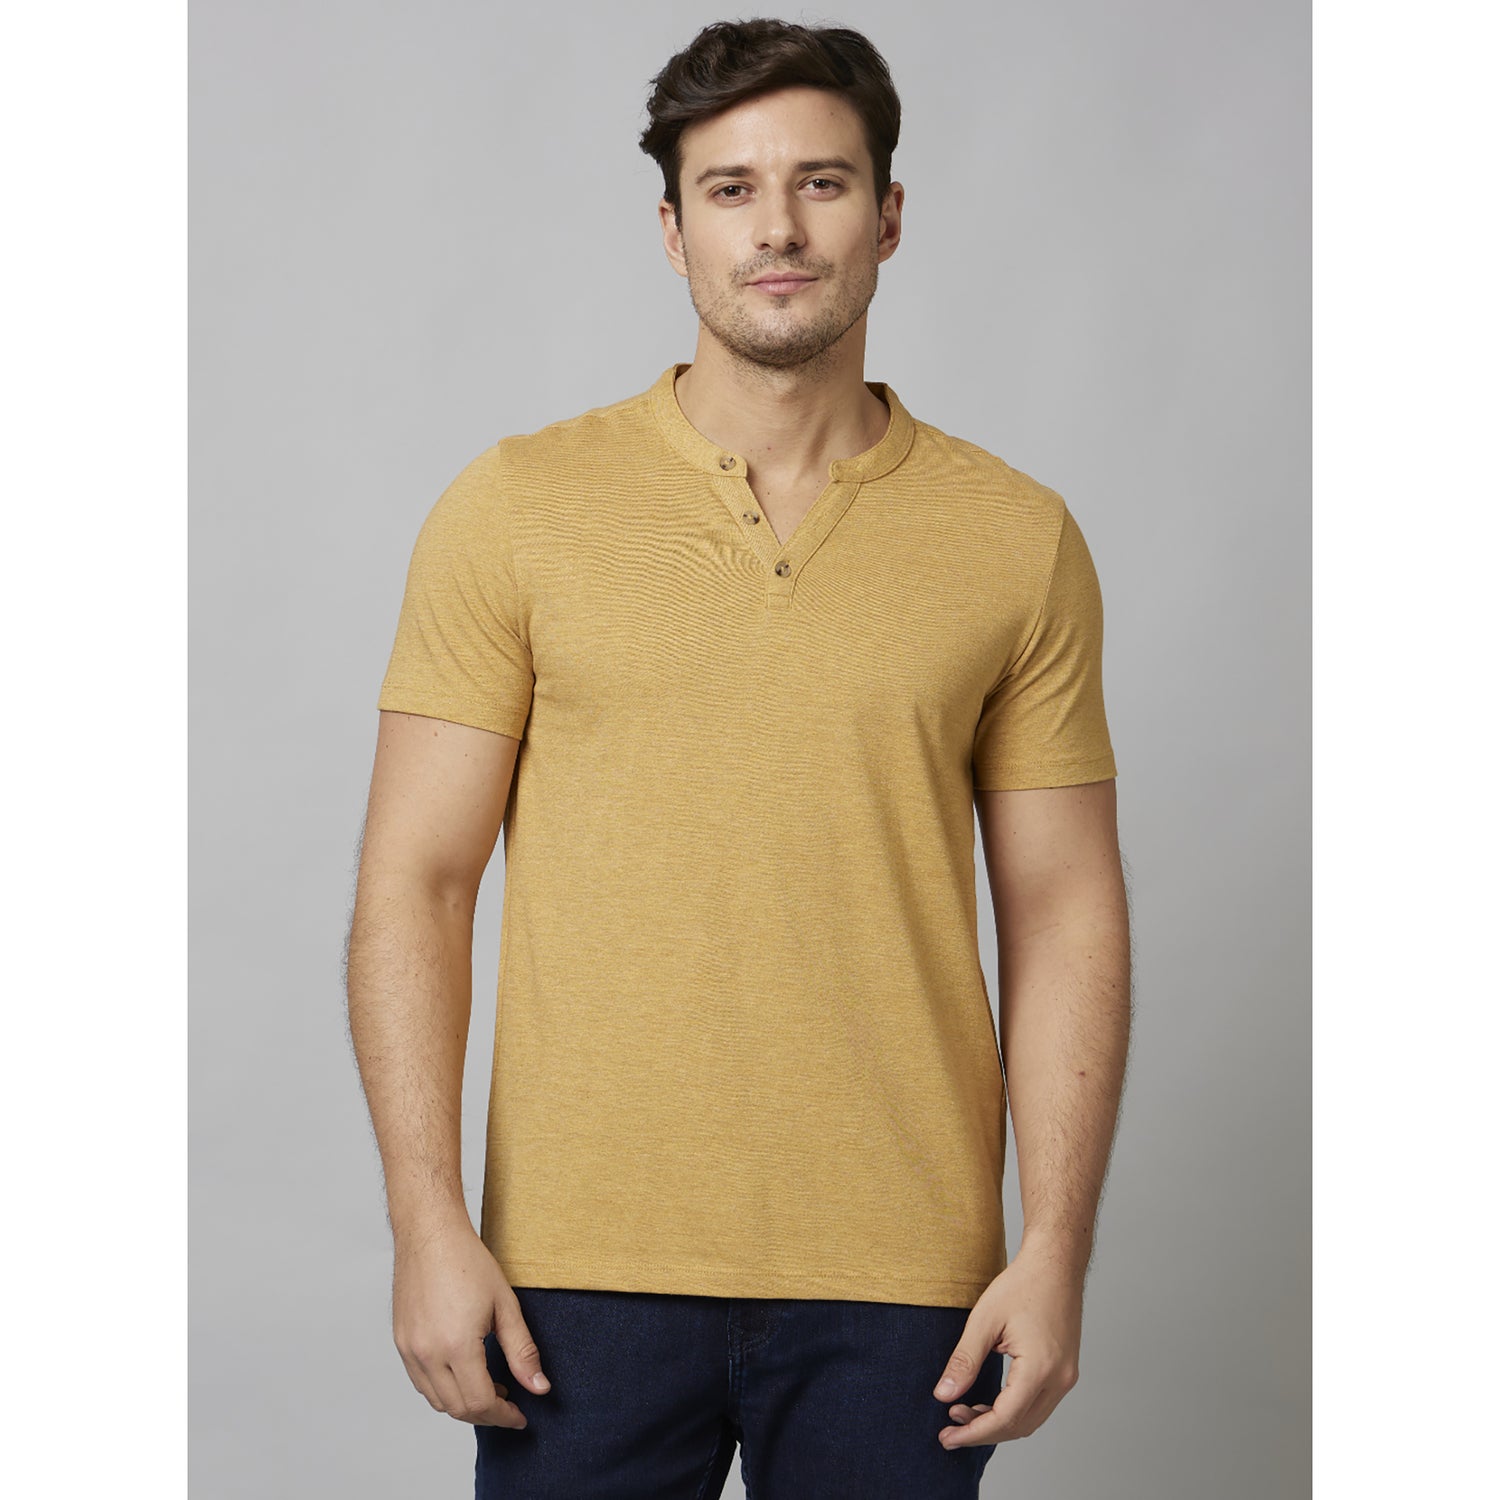 Mustard Solid Short Sleeve Cotton Blend T-Shirts (CEGETI1)